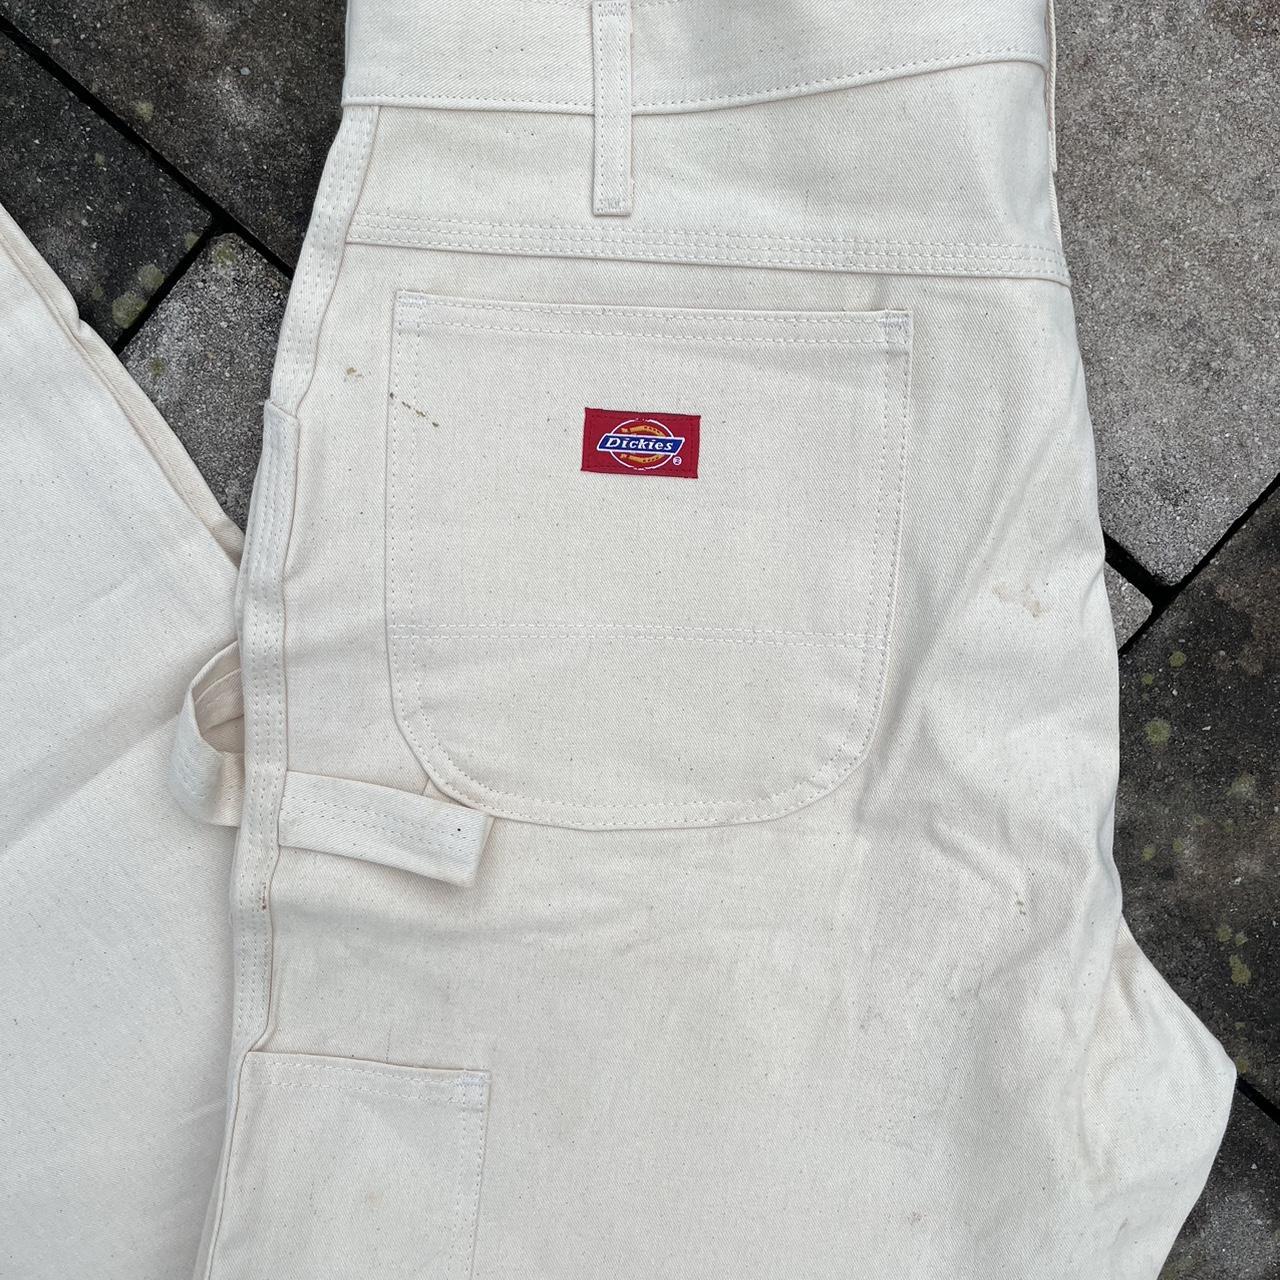 cream colored dickies pants size 38 W 32L - Depop